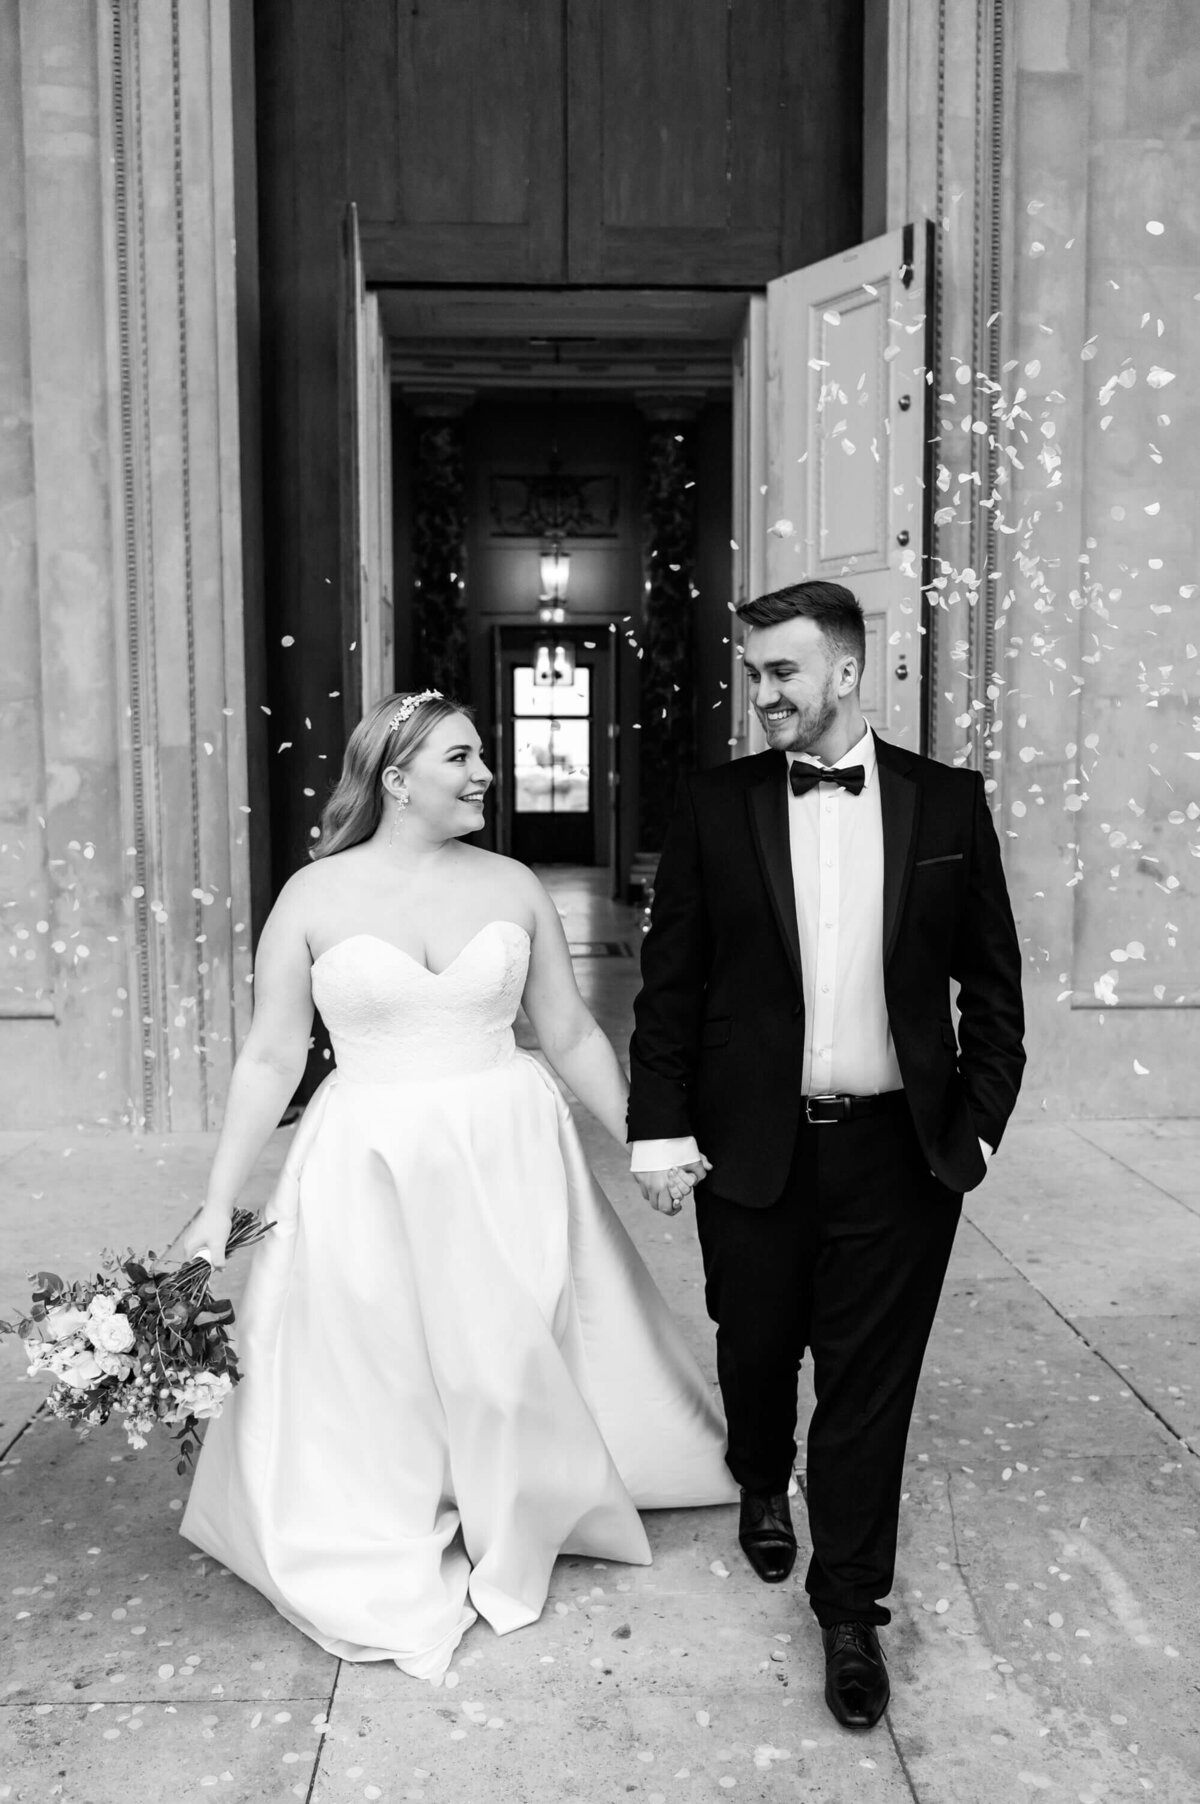 Stowe House Wedding Photographer - Buckinghamshire UK Wedding Photographer - Chloe Bolam - Luxury UK Wedding Venue -54